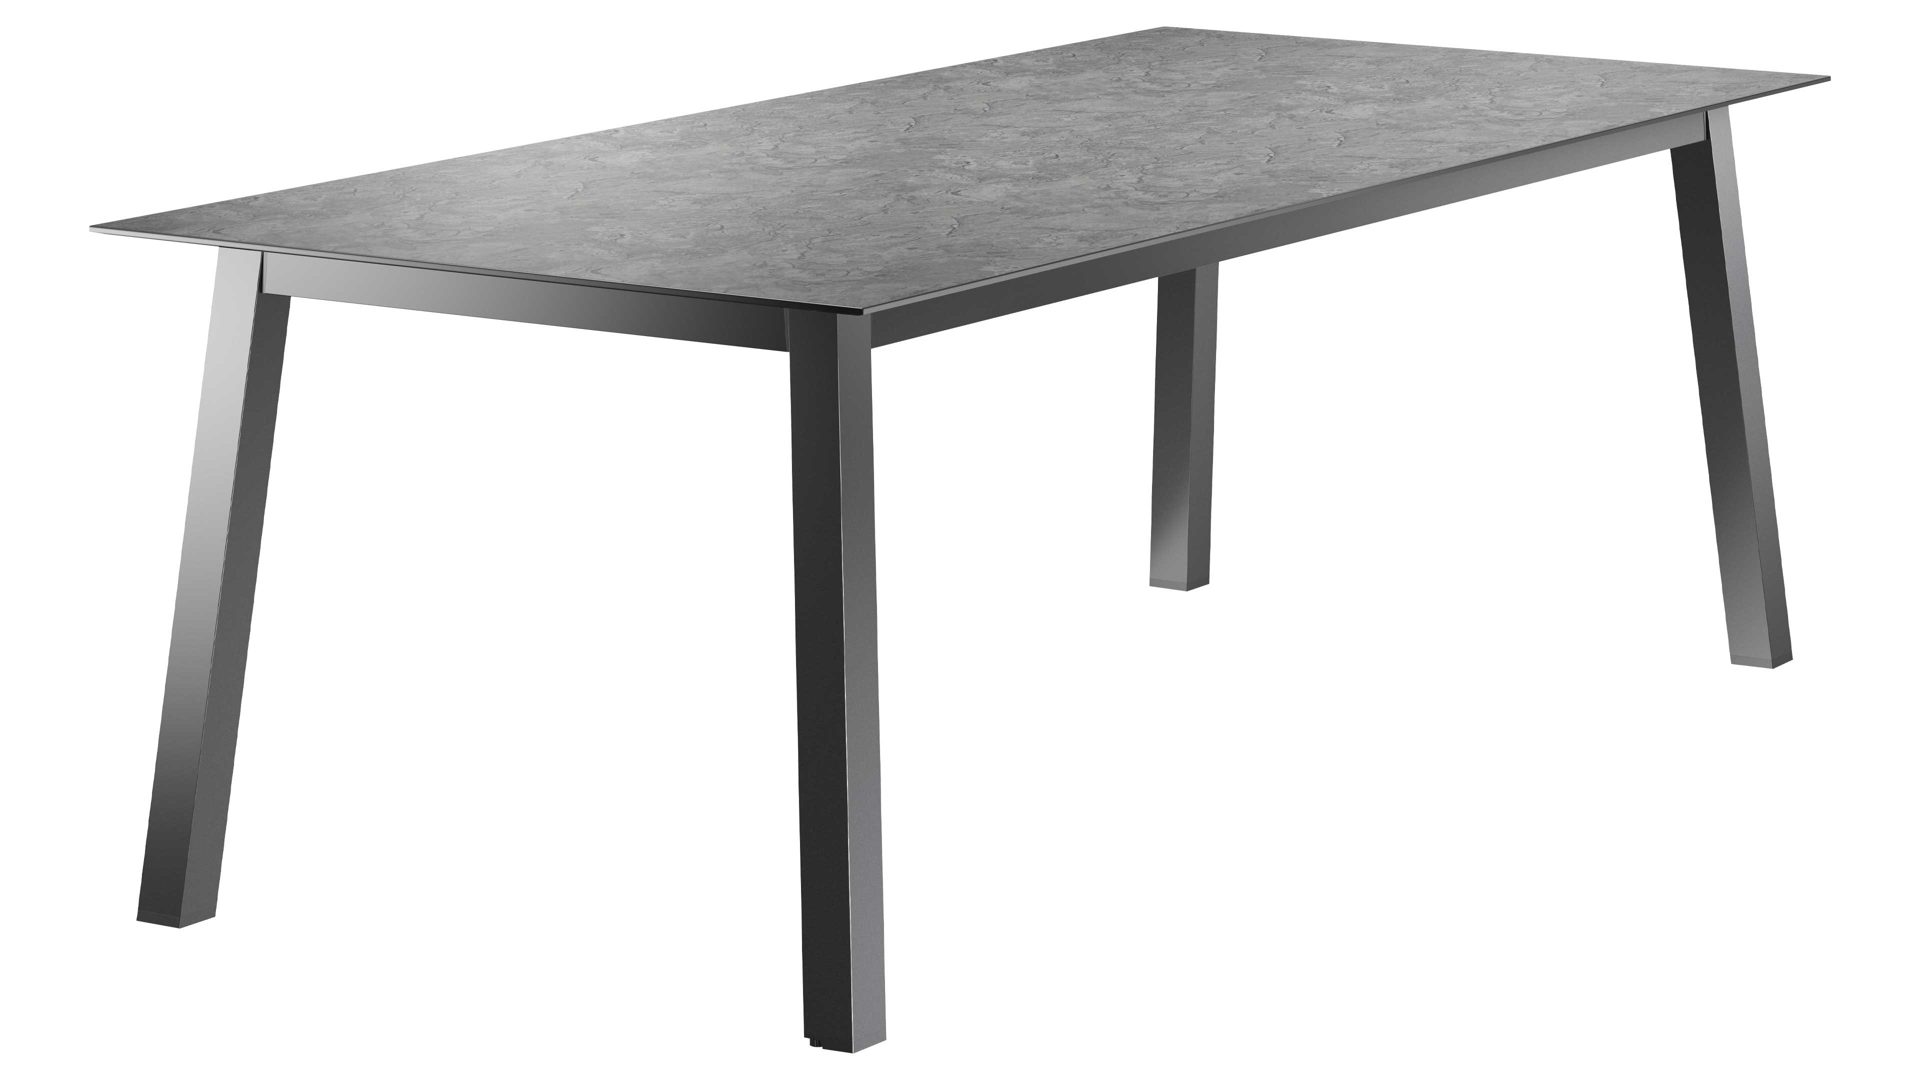 Tischgestell Sieger aus Metall in Dunkelgrau sieger Tischgestell eisengraues Aluminium - ca. 220 x 80 cm